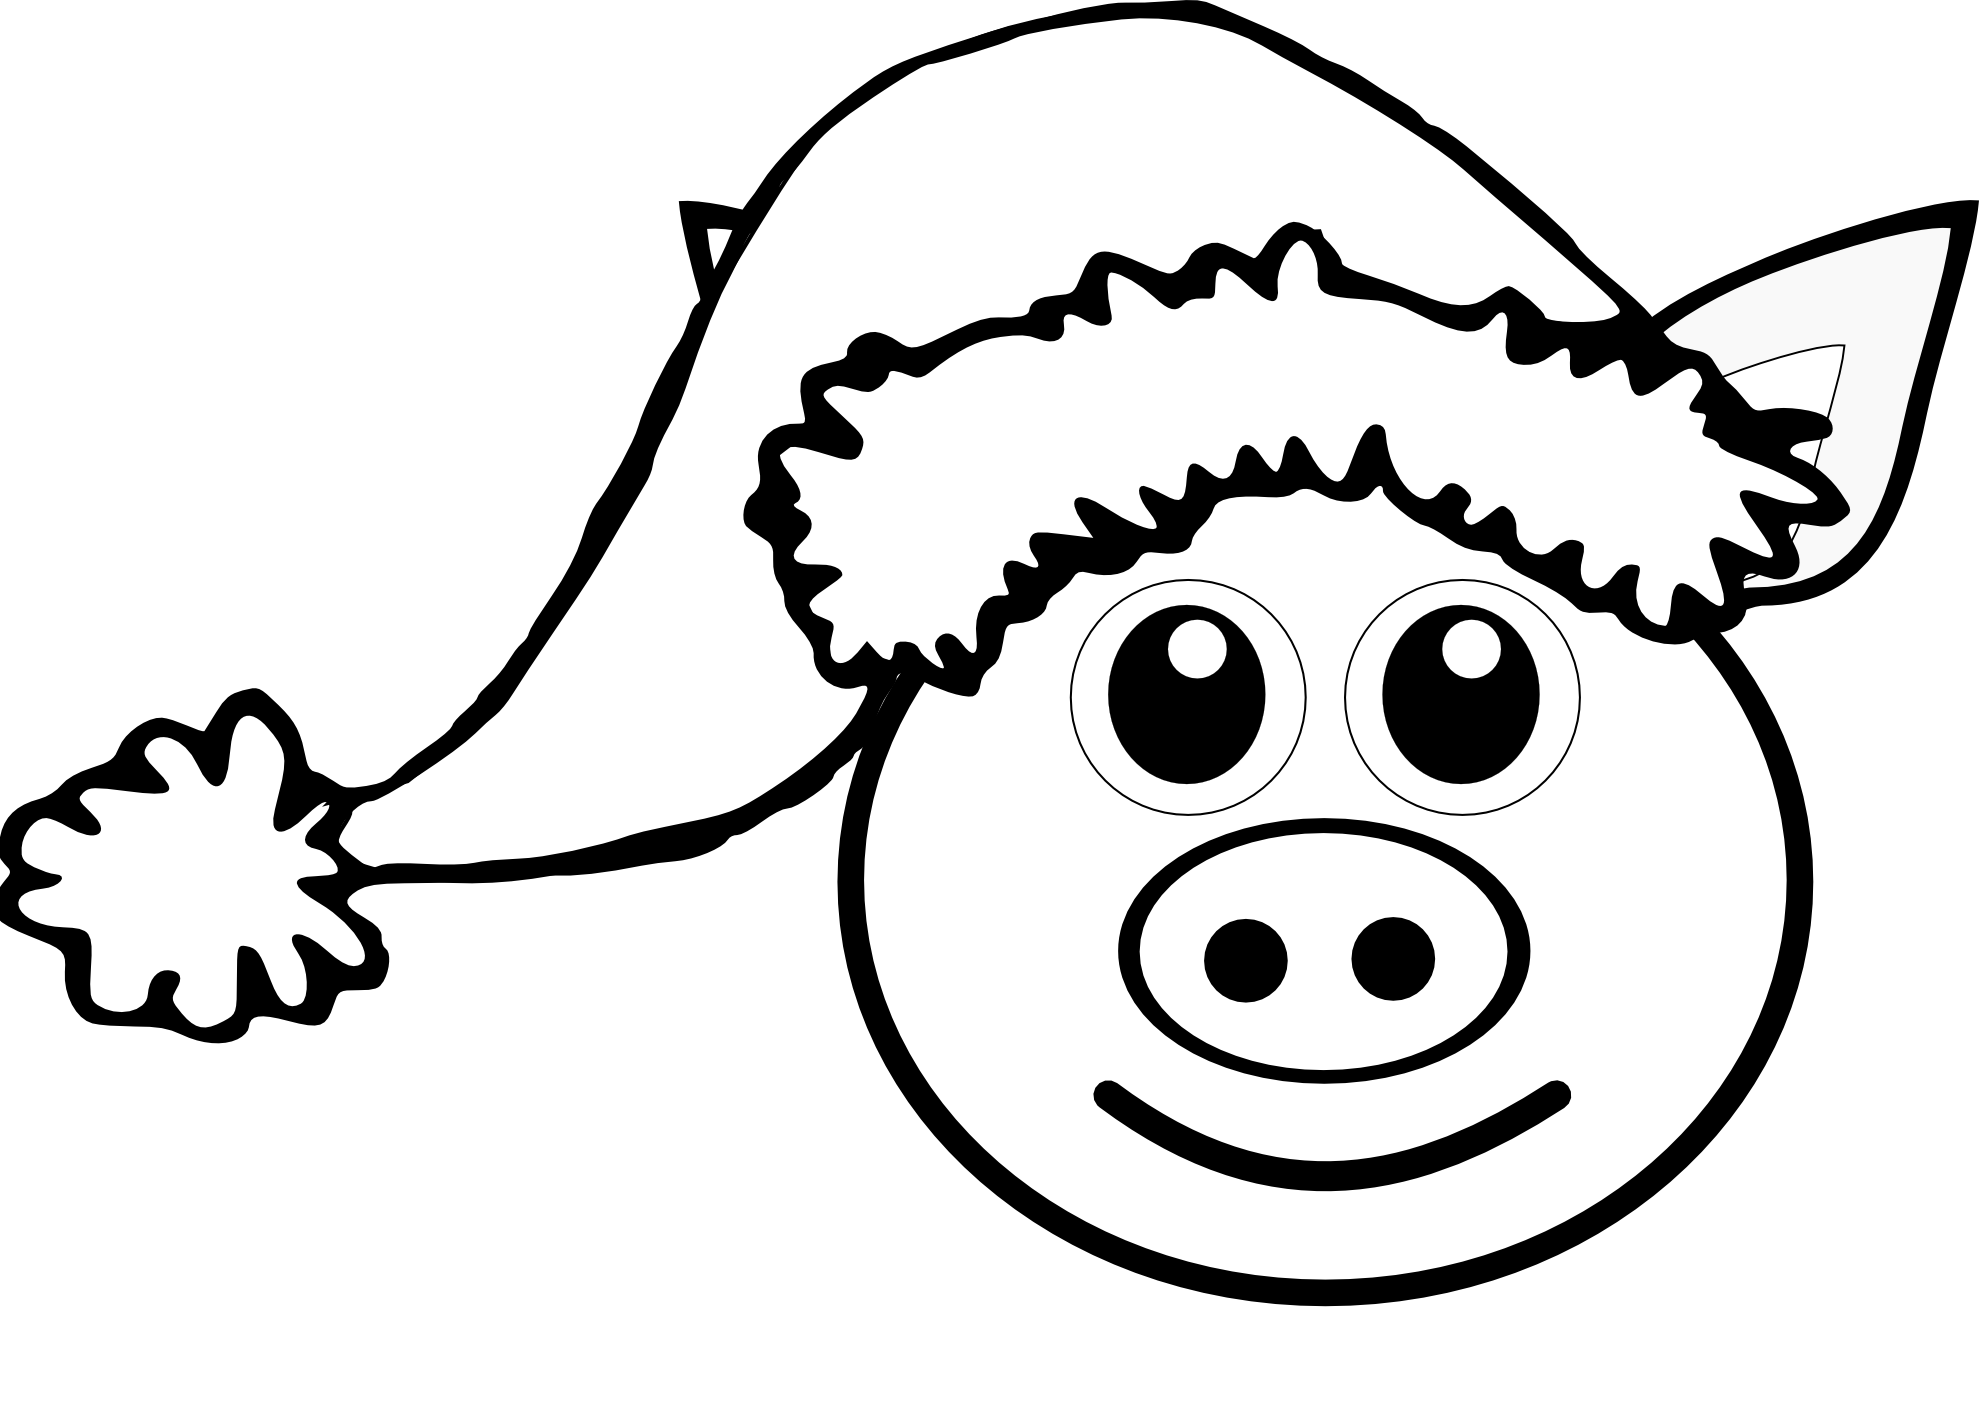 Cartoon Pig Faces - ClipArt Best